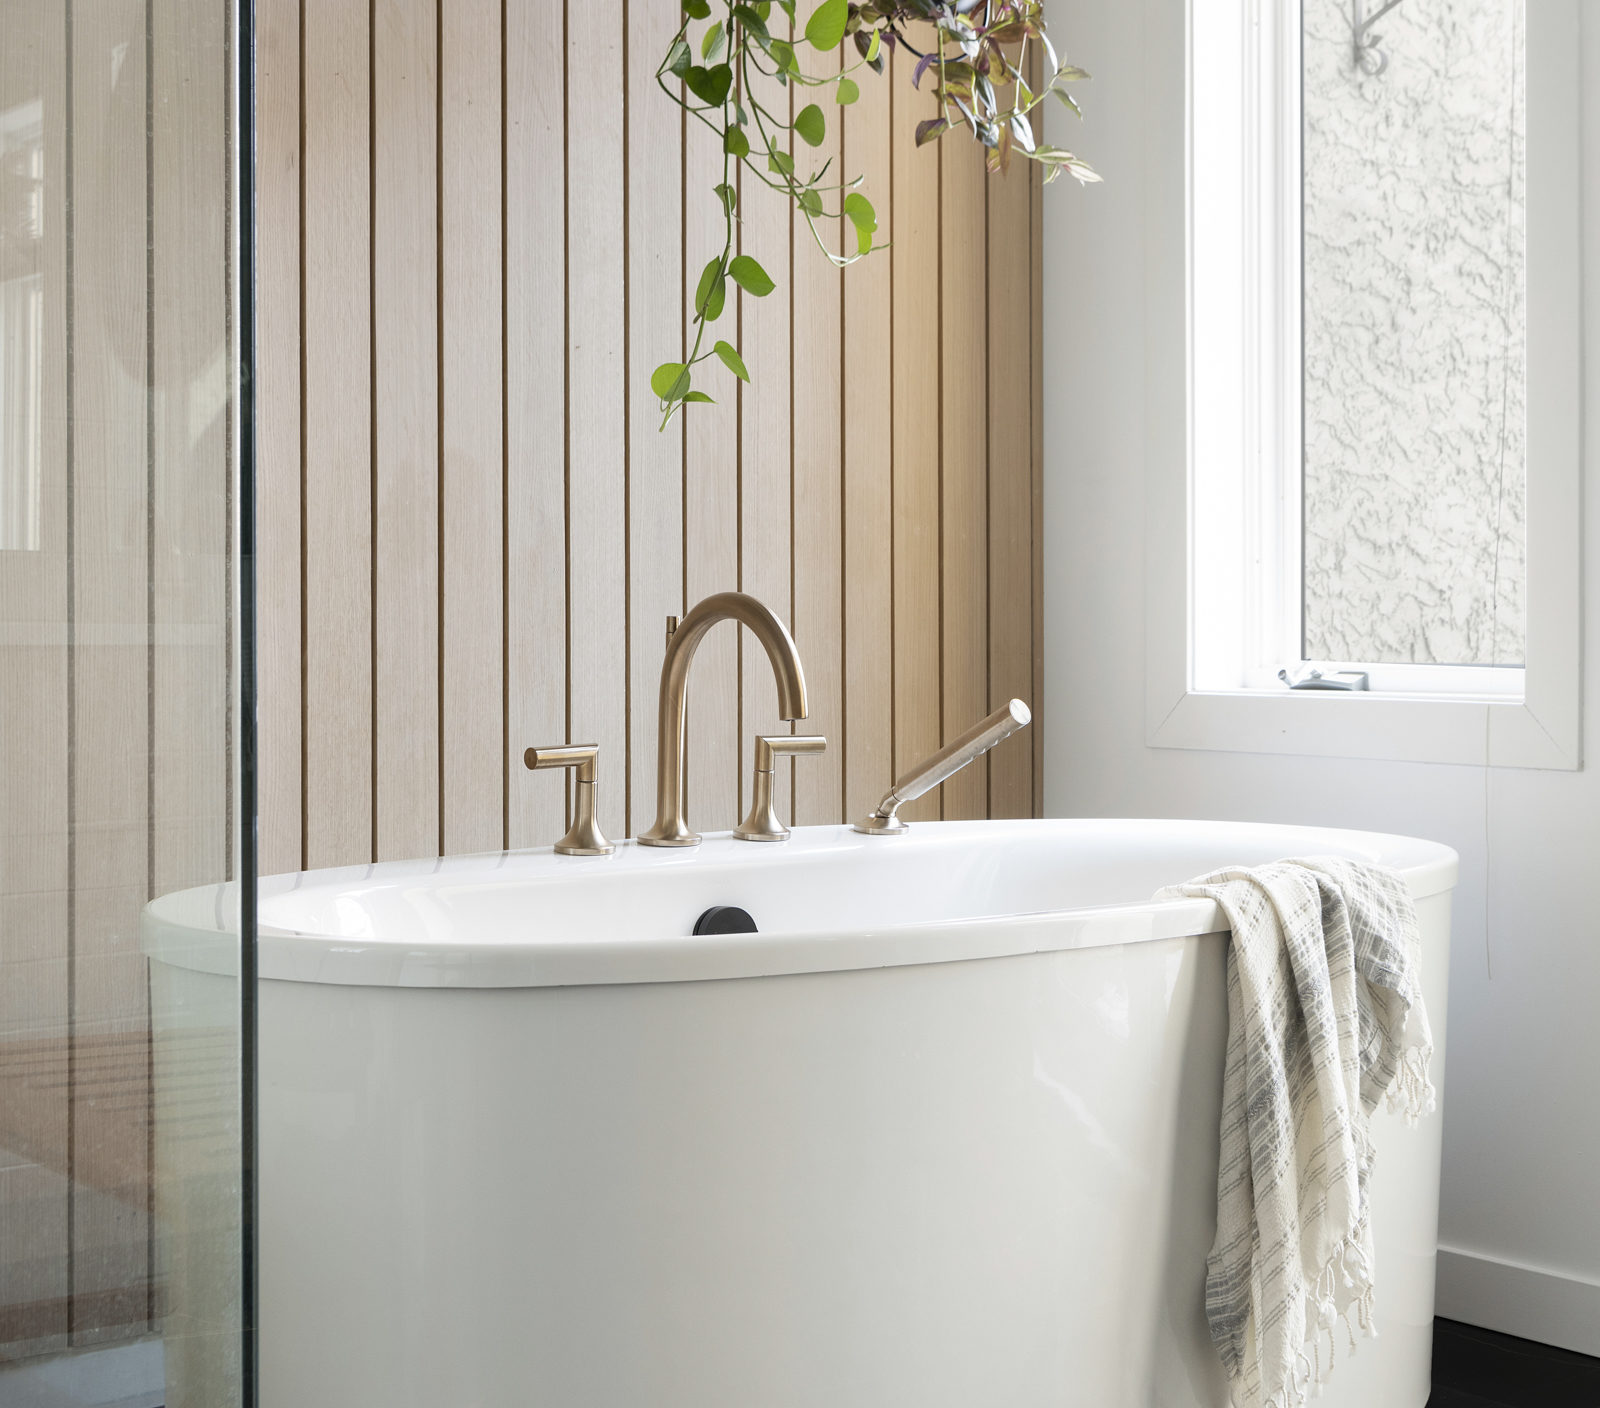 Soaker tub design ideas | construction2style.com